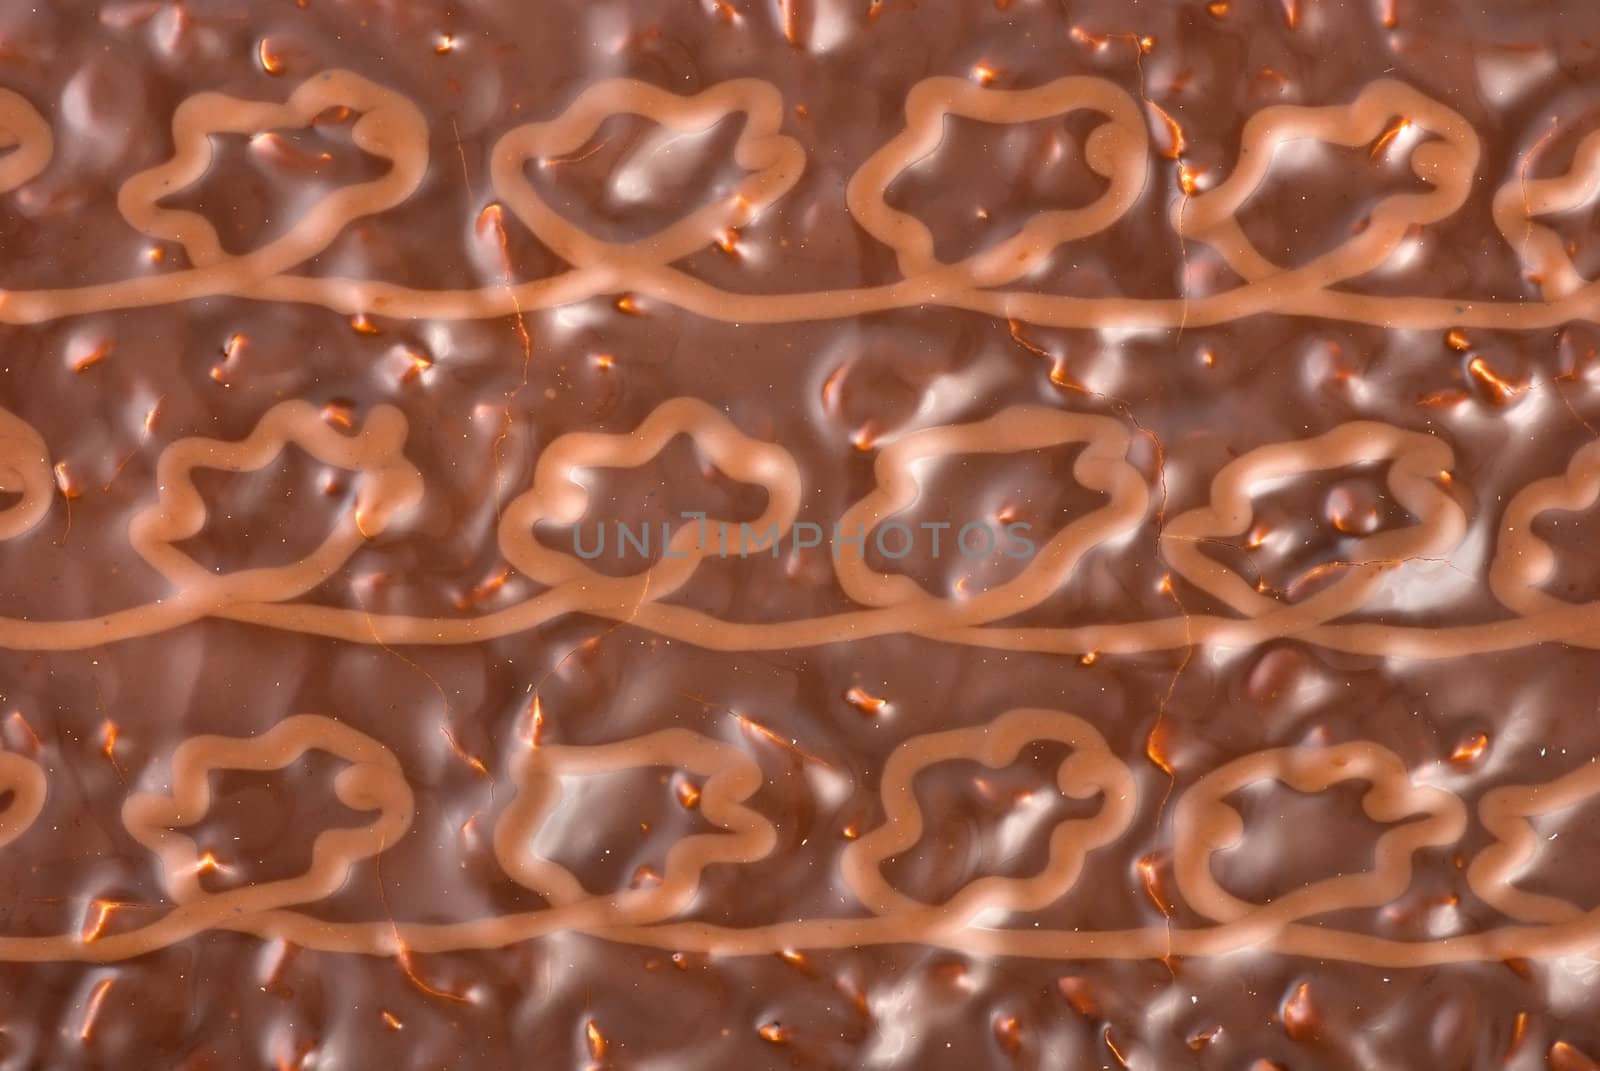 Close up shot of a dark chocolate block